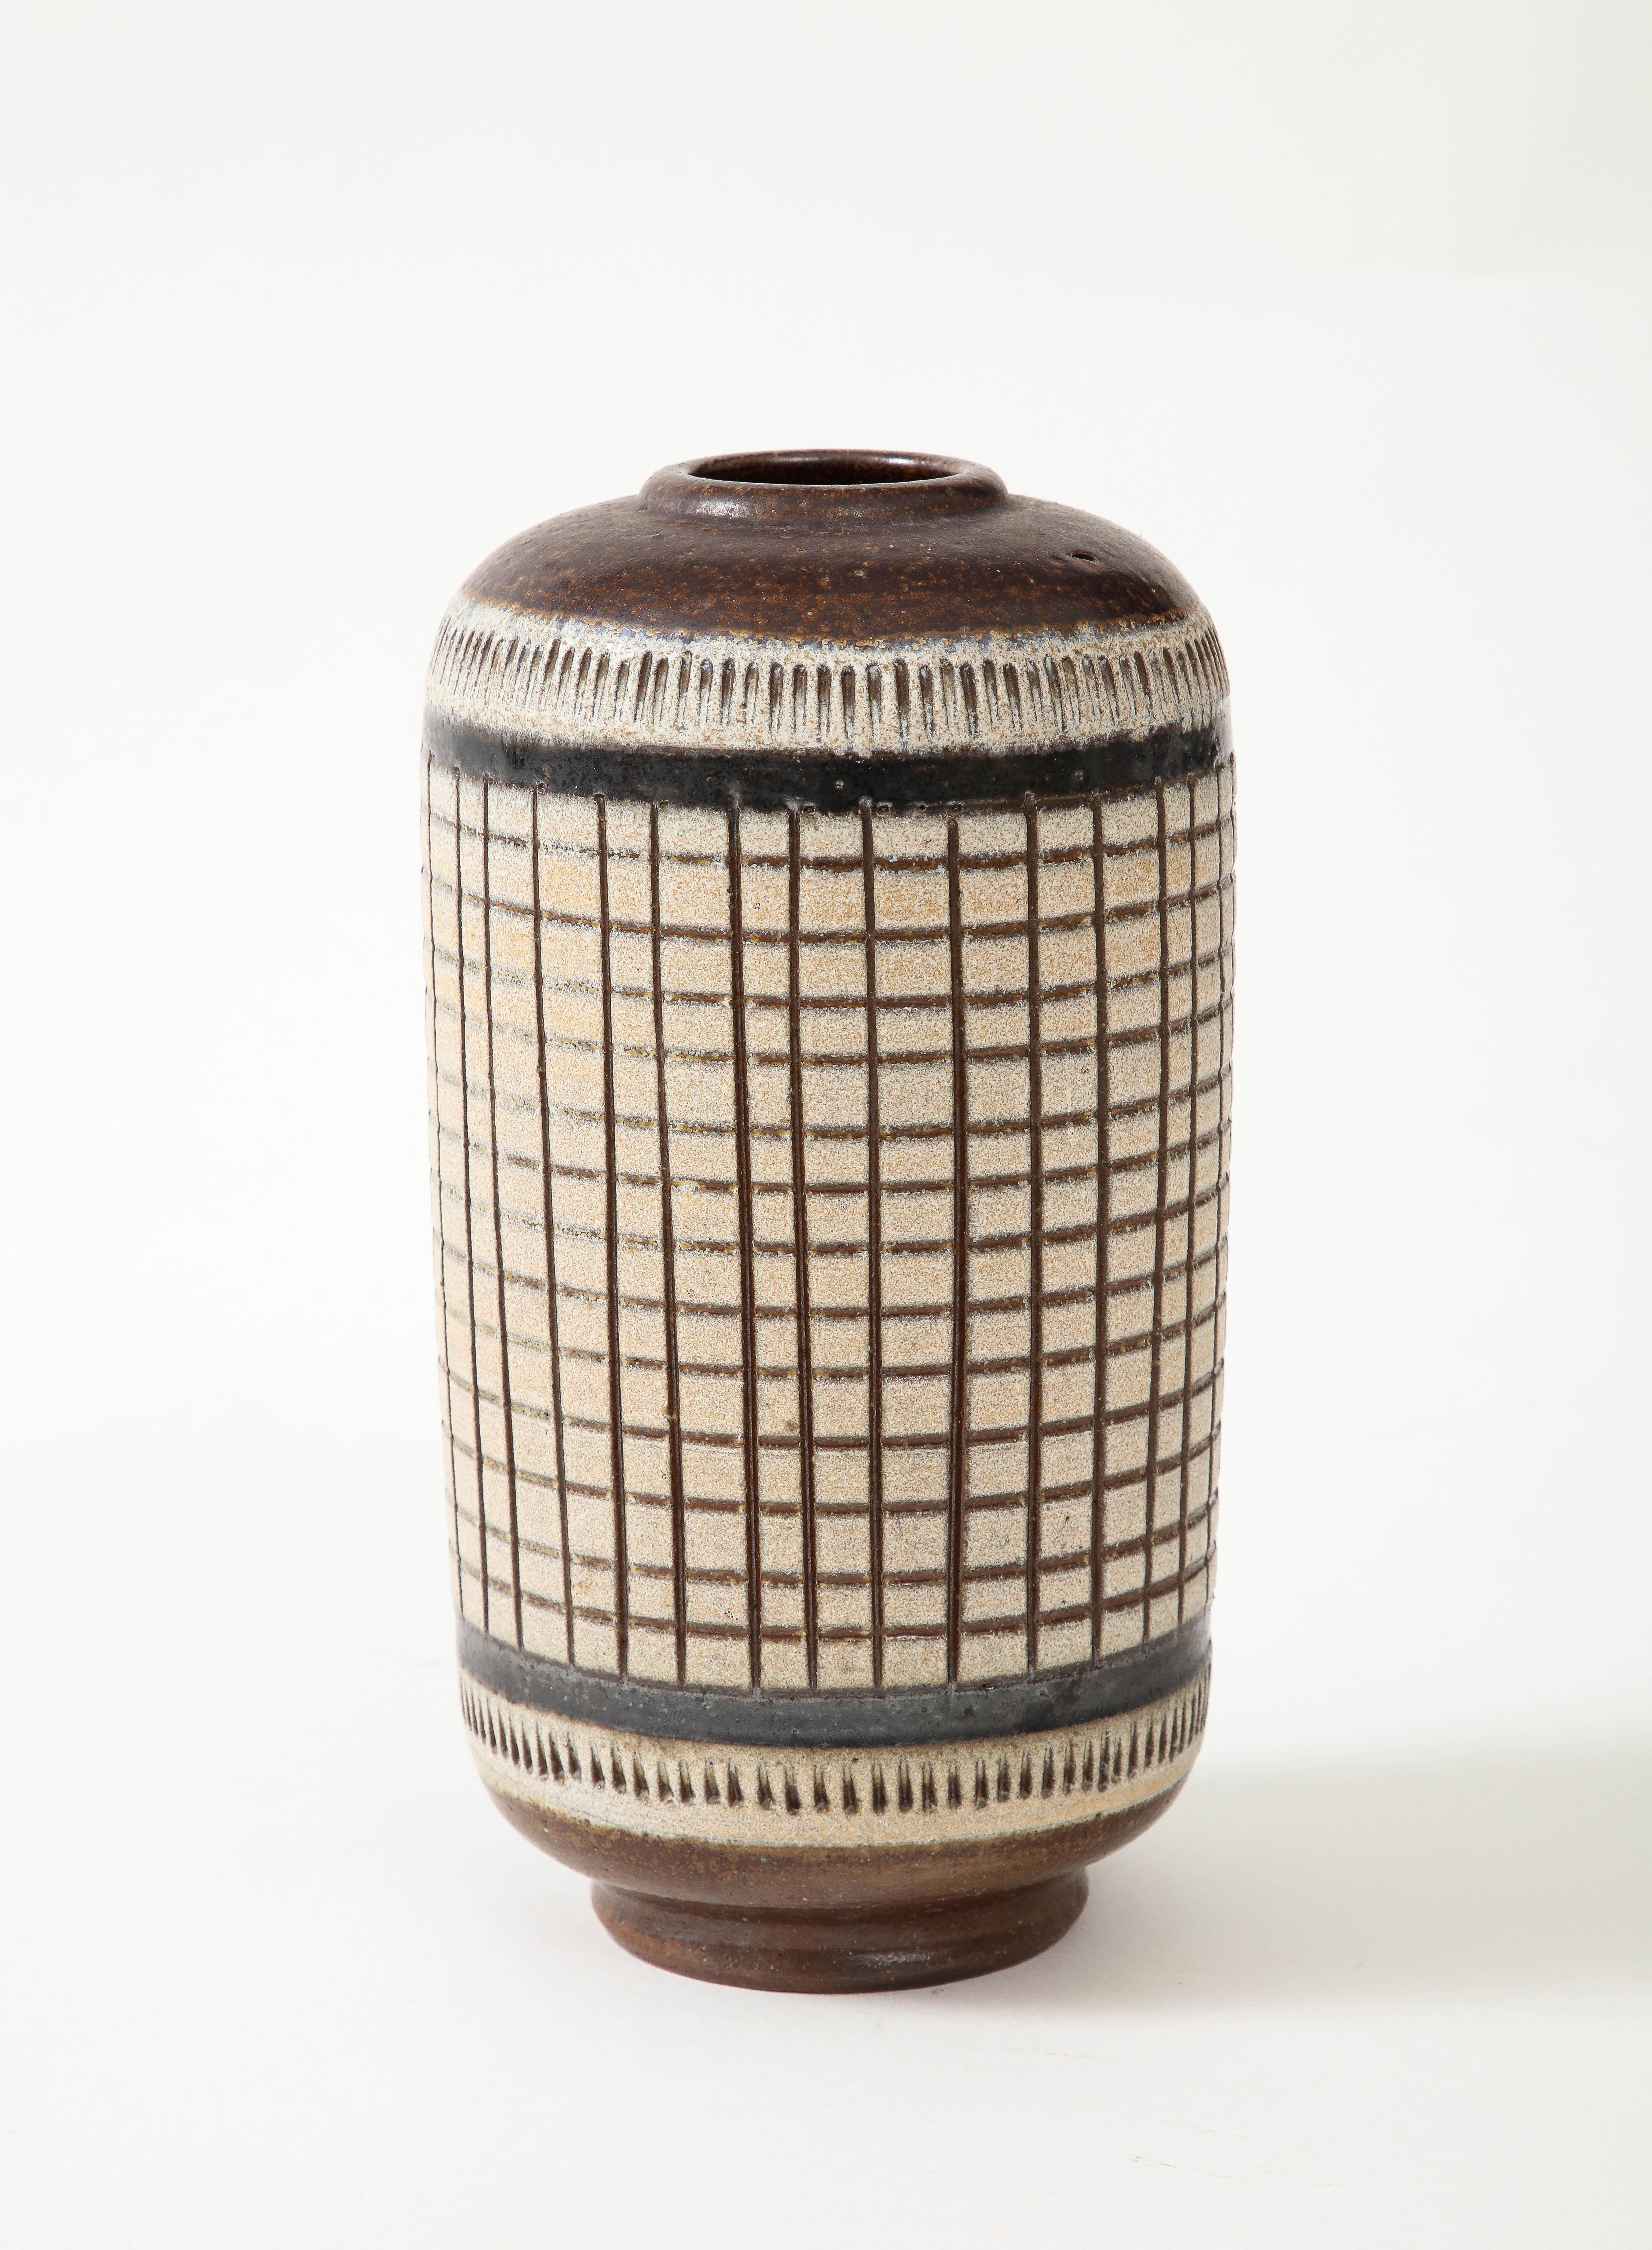 Scandinavian Modern Brown, Black, Cream Glazed Vase, Grid Pattern, Walläkra, Sweden, 1950, Signed